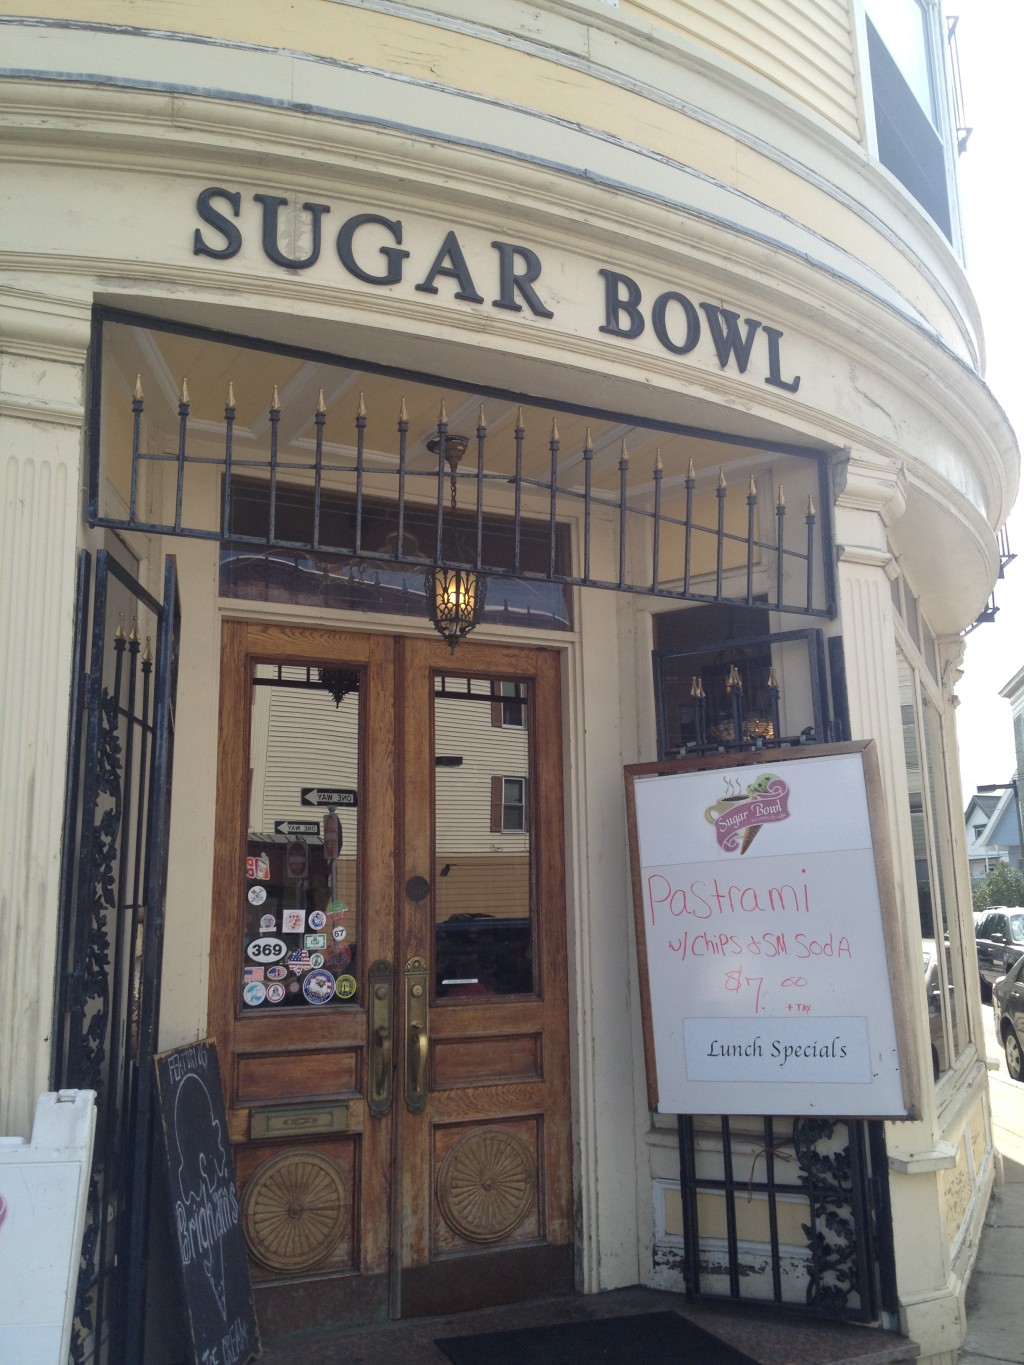 The Sugar Bowl knows coffee…